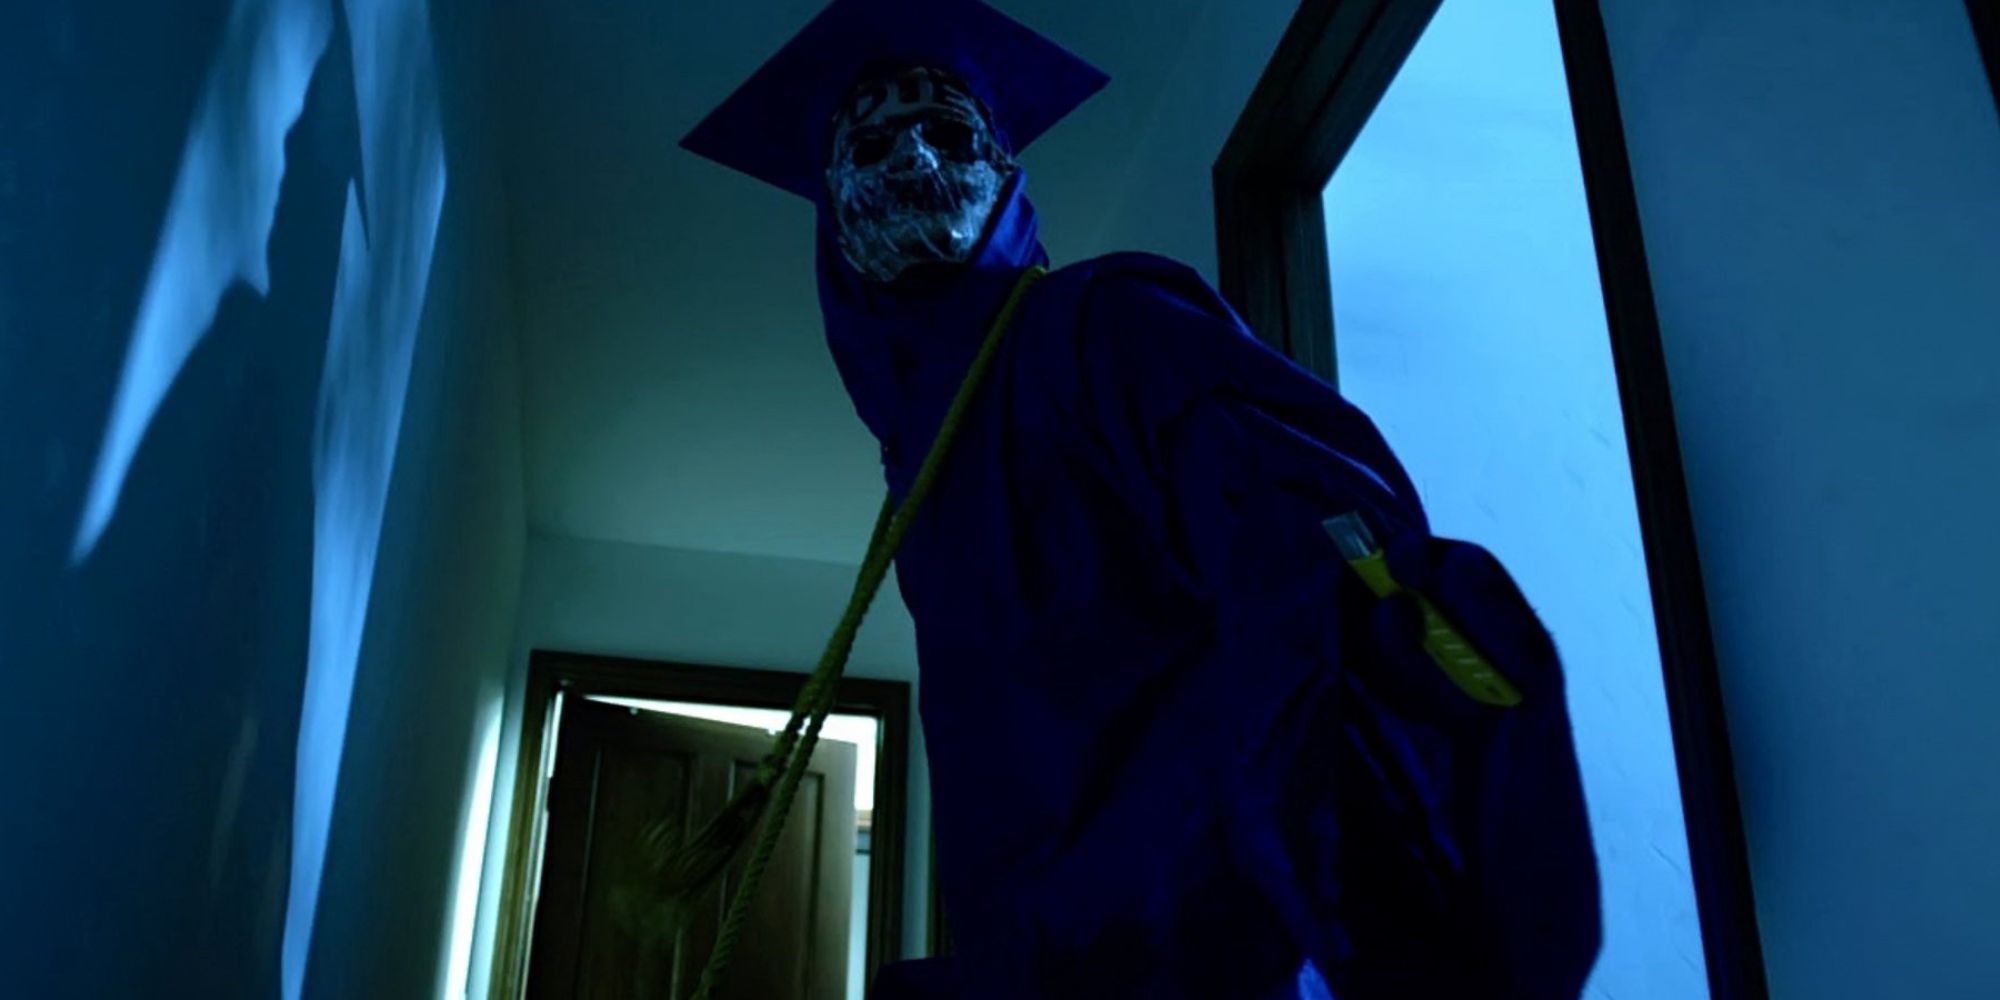 The graduate killer looms menacingly in a corridor